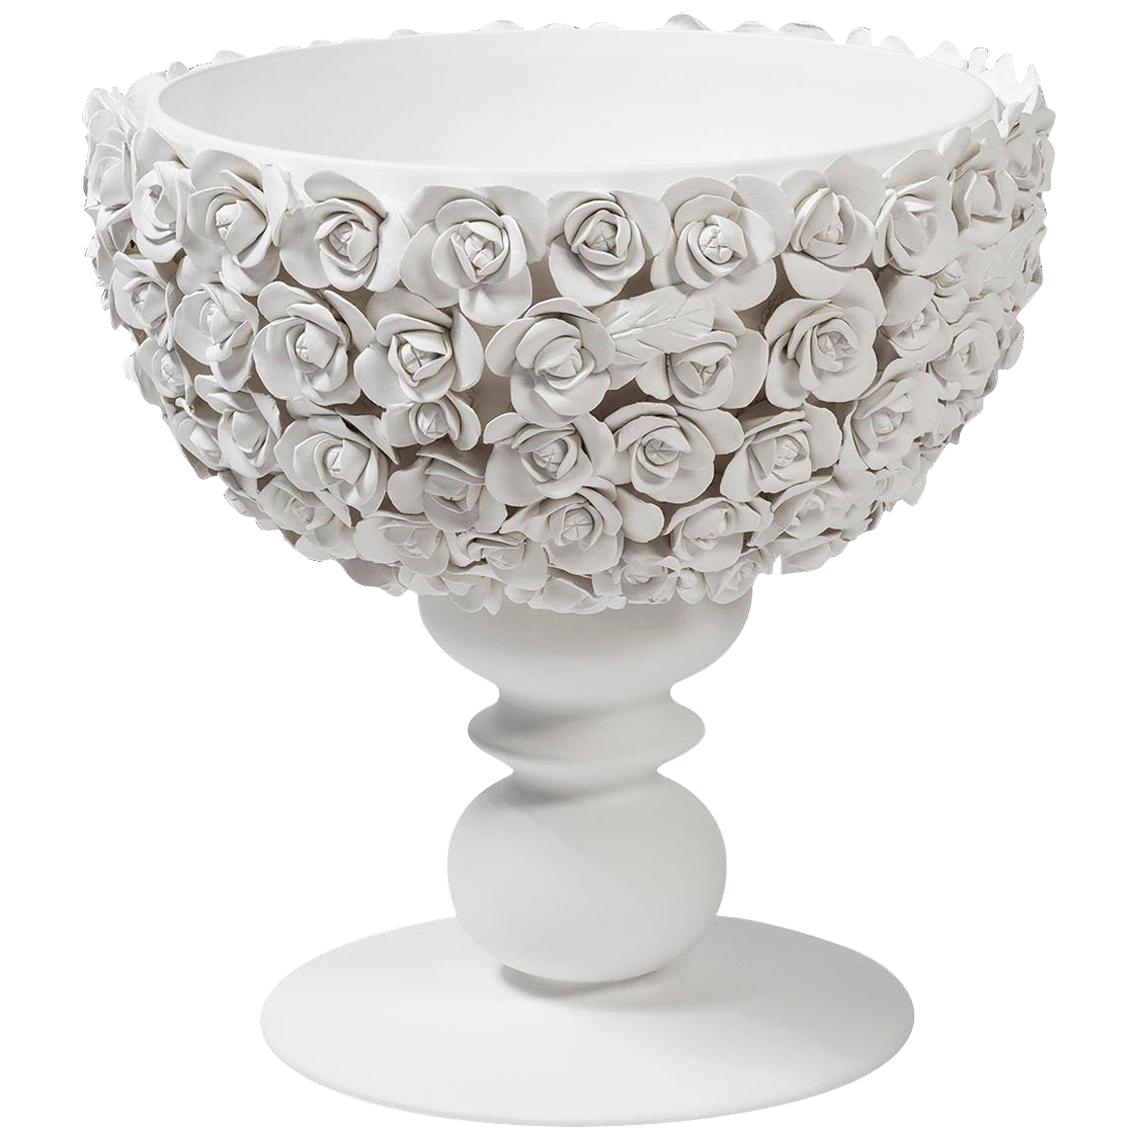 Bowl Coco Camellias, Matt White Ceramic, Italy For Sale